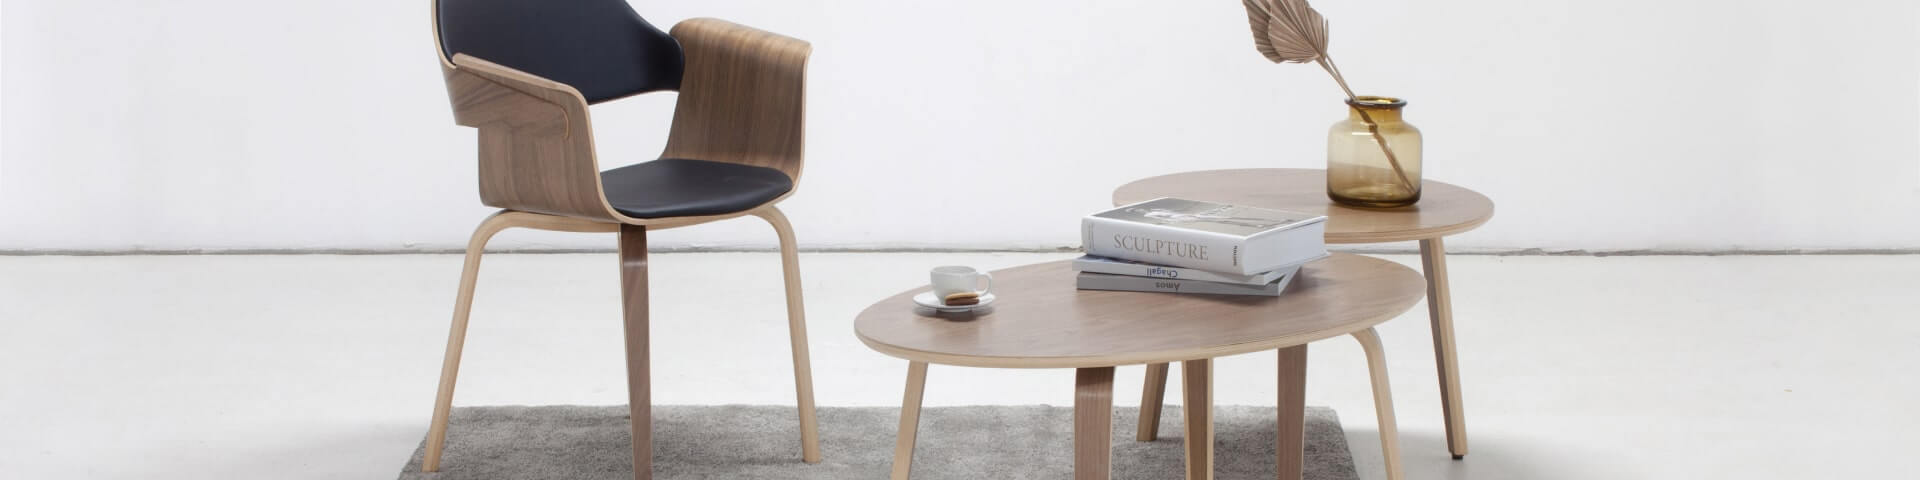 Plydesign's iF Design awarded FRIGATE chair showcasing innovative 3D-veneer craftsmanship.